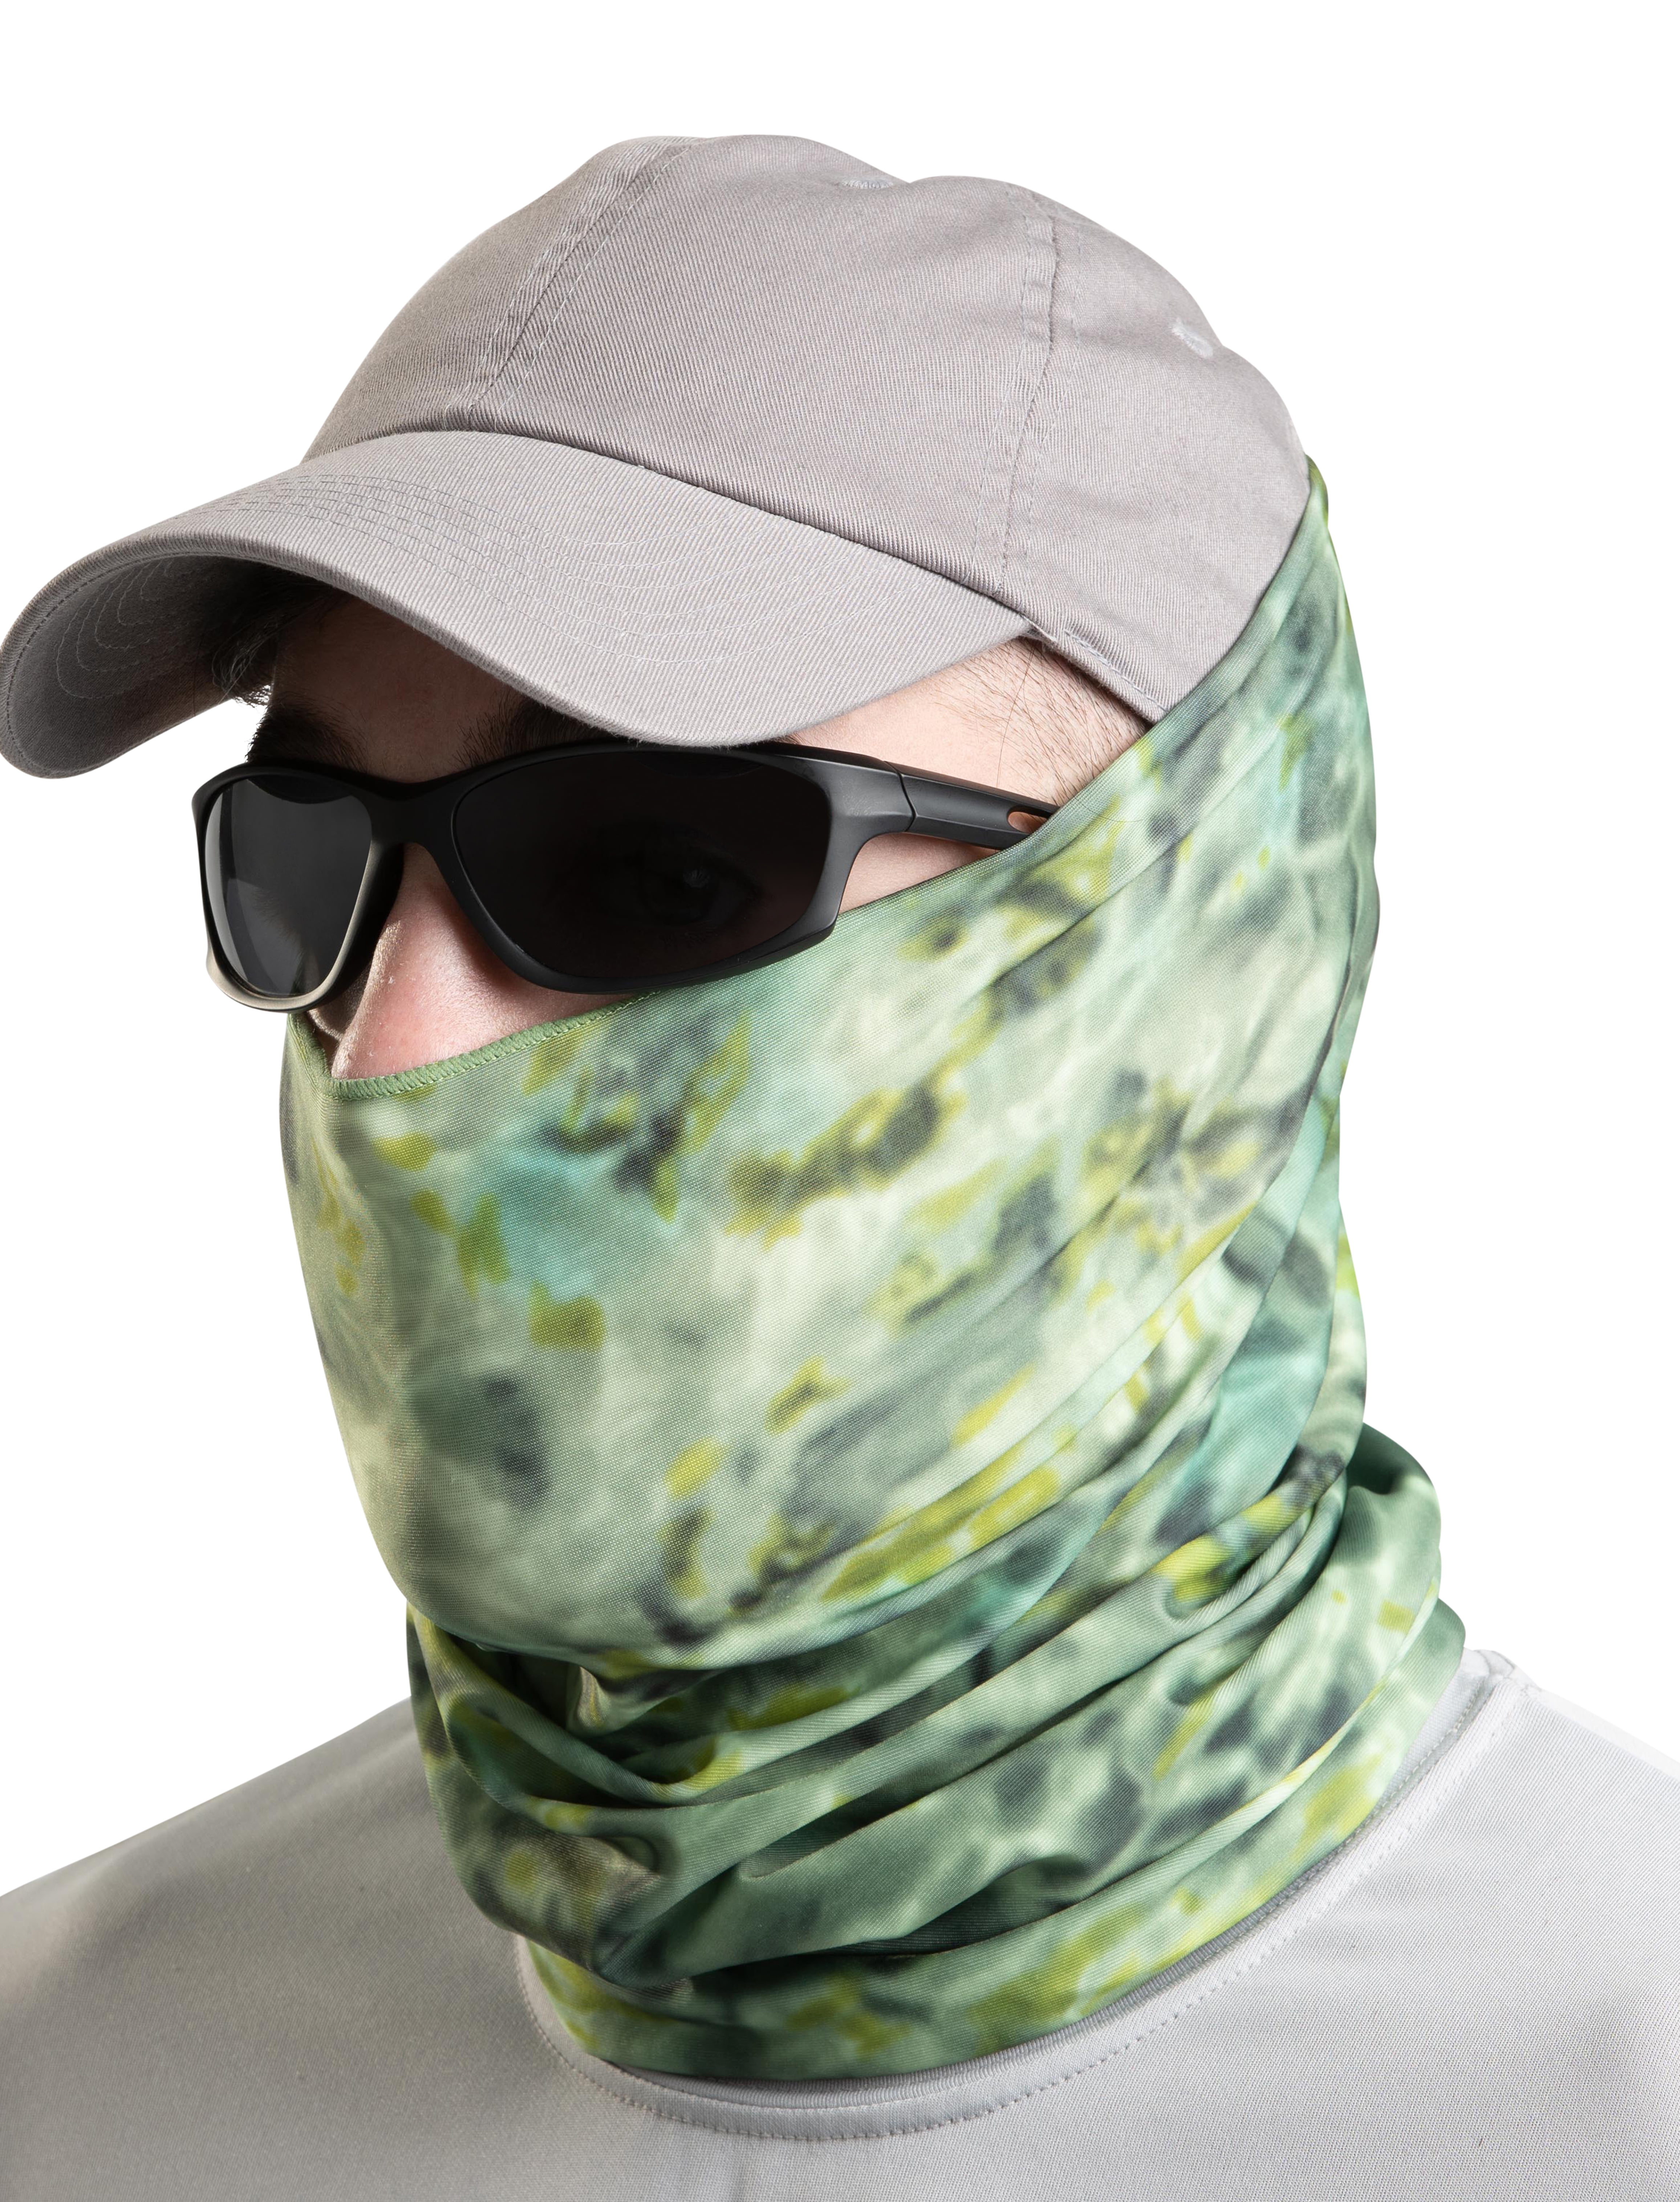 SUN GAITER Mask Bandana UPF 50 UV Protect Fishing American Flag Print Face Neck 